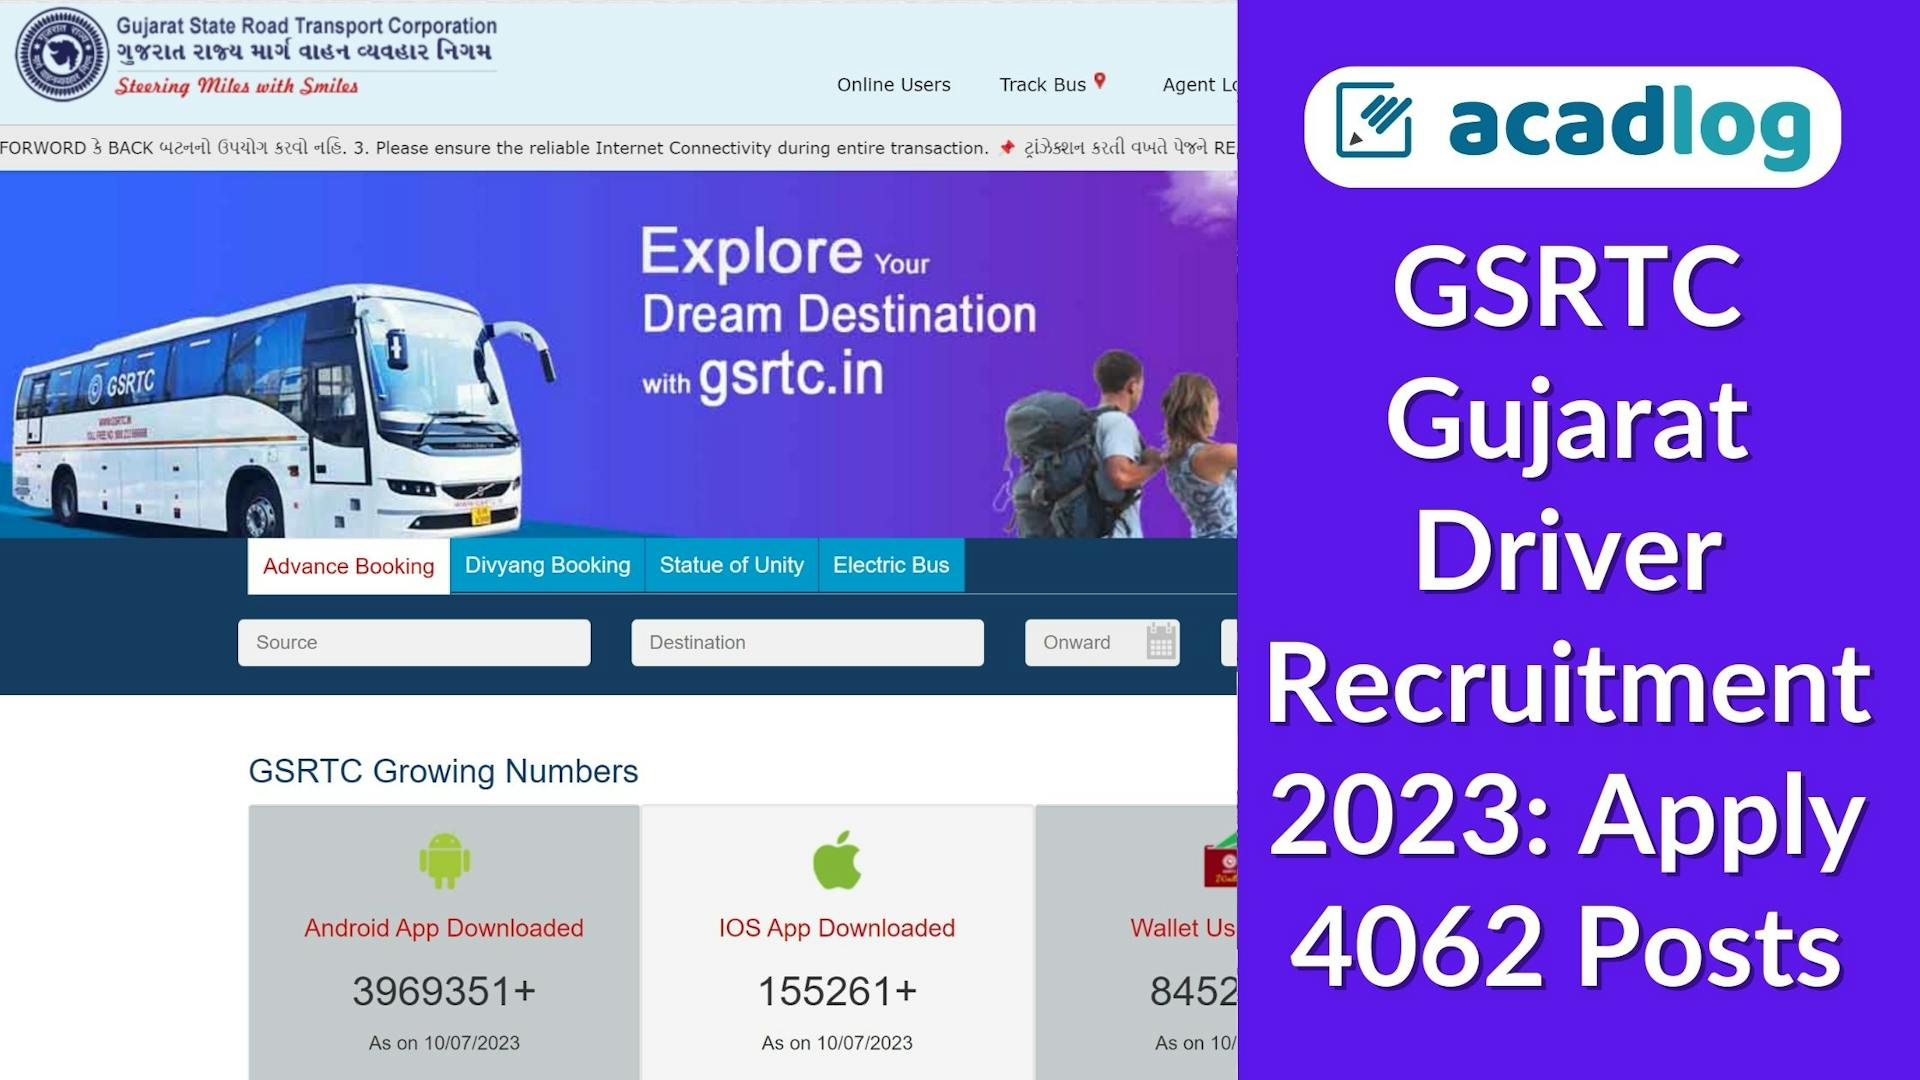 GSRTC Gujarat Driver Recruitment 2023: Apply 4062 Posts